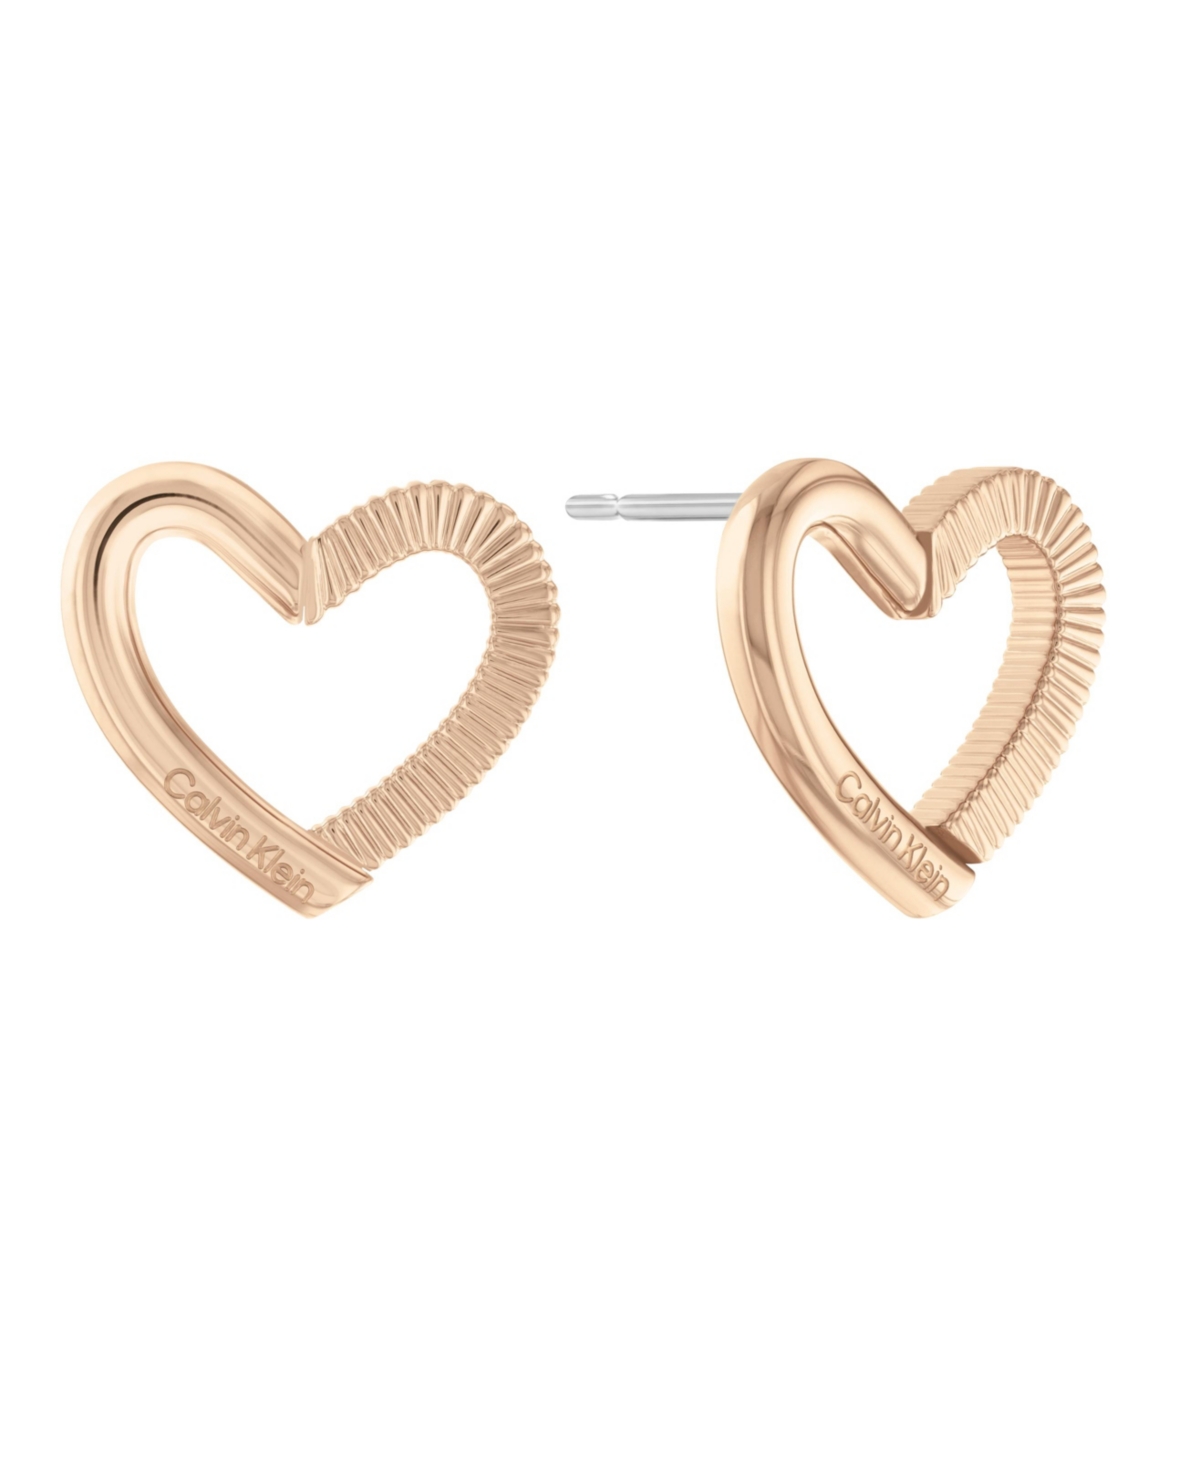 Women's Stainless Steel Heart Earrings - Carnation Gold Tone